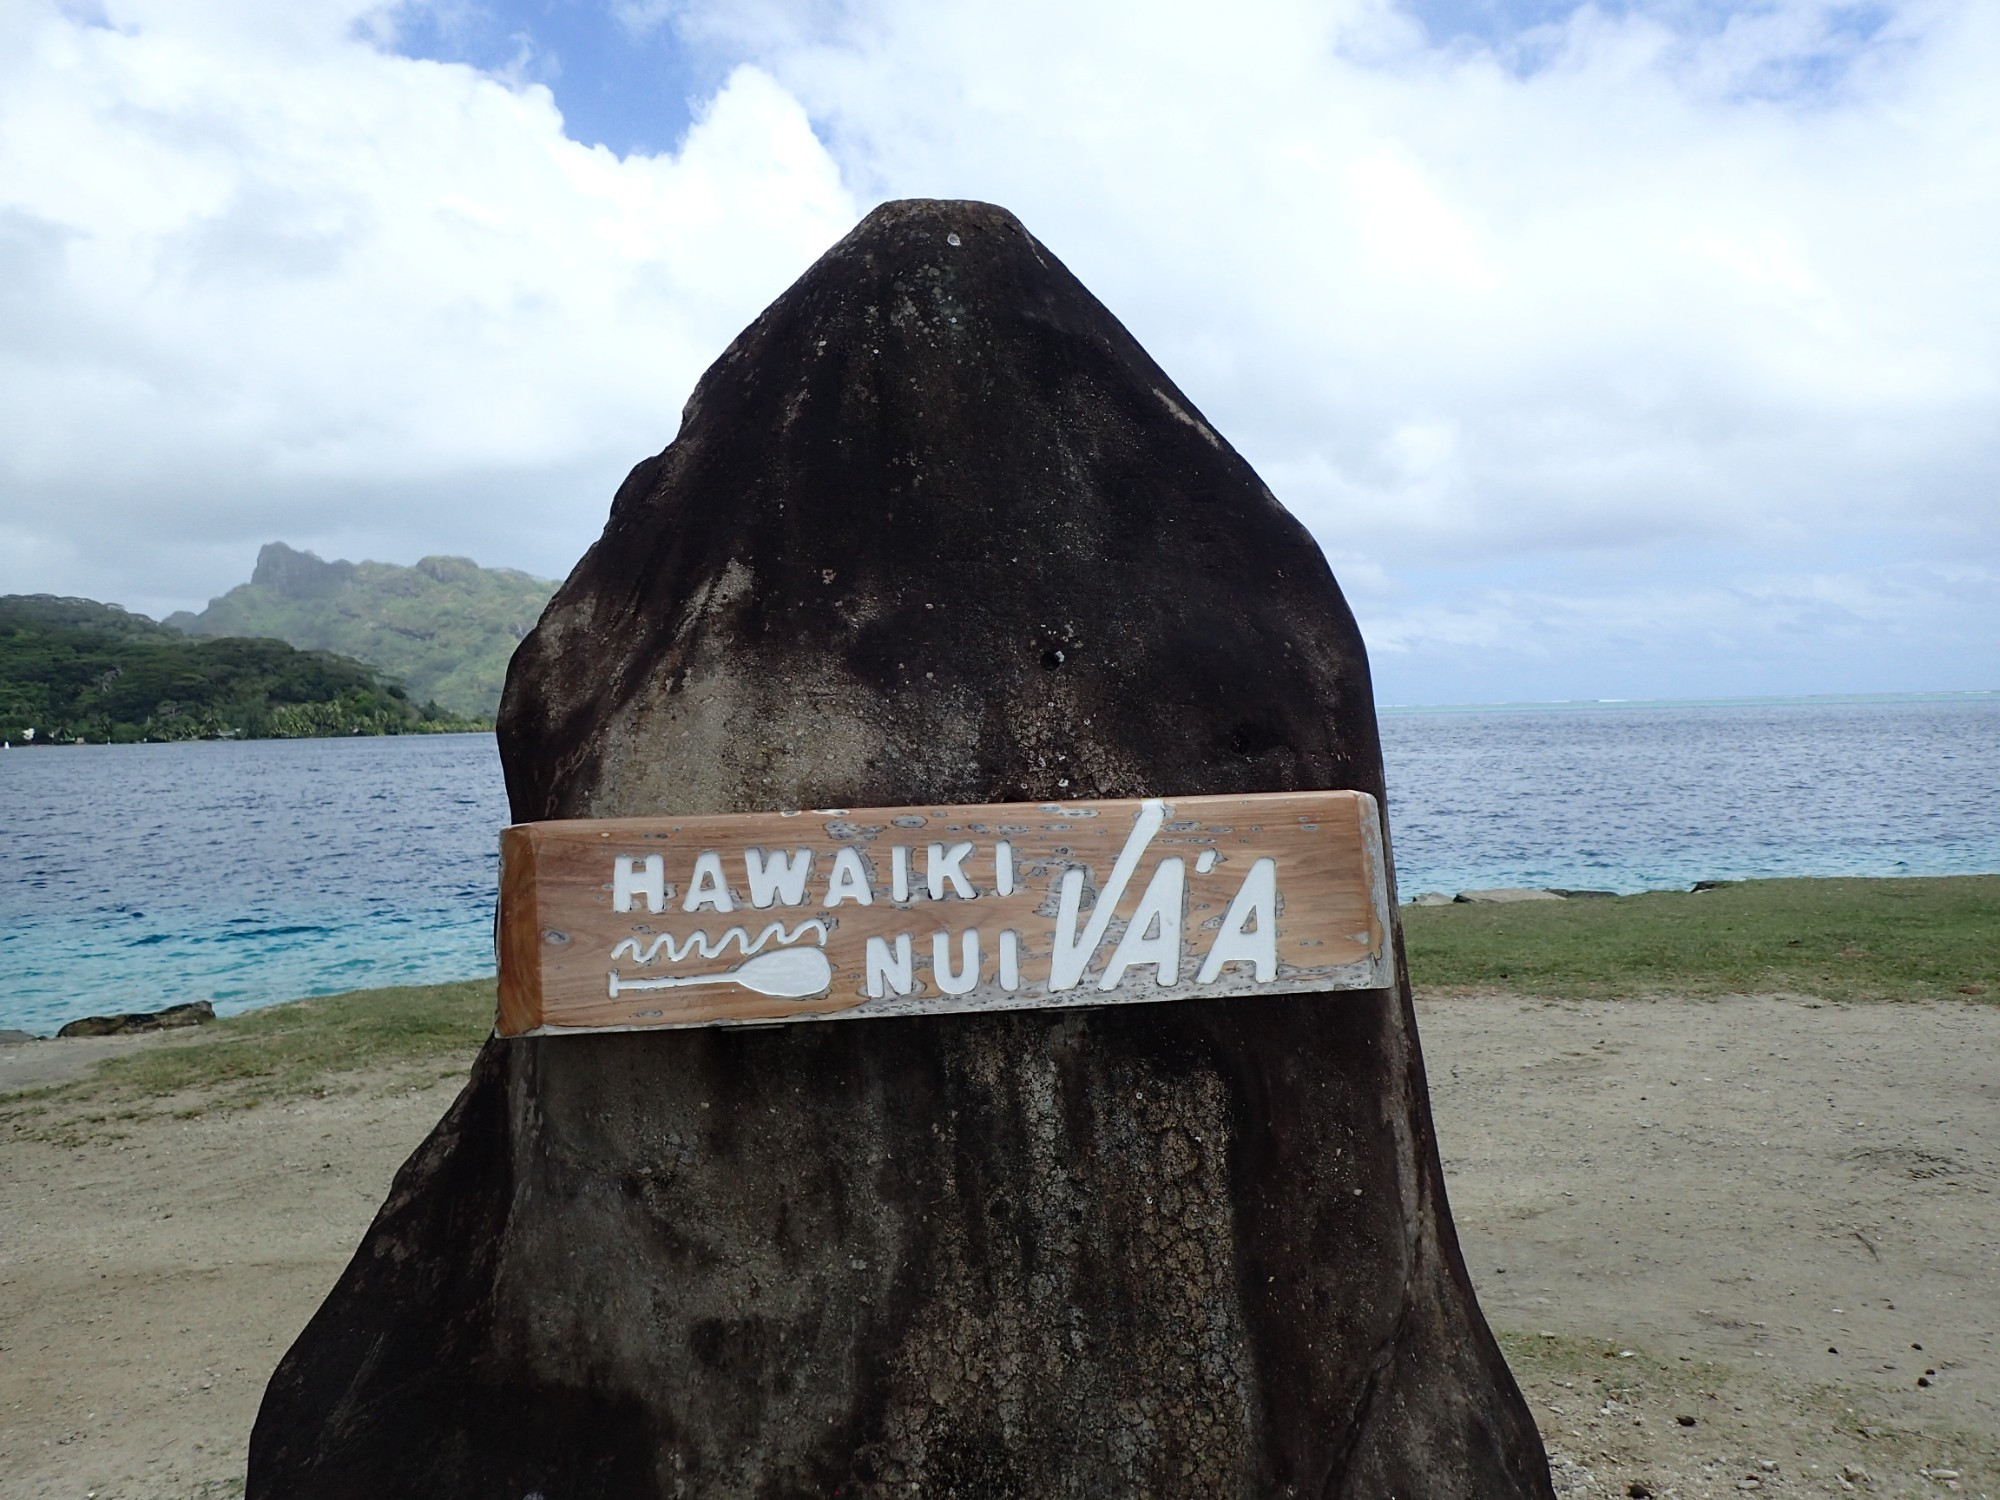 Hawaiki Nui Va'a Monument, Французская Полинезия